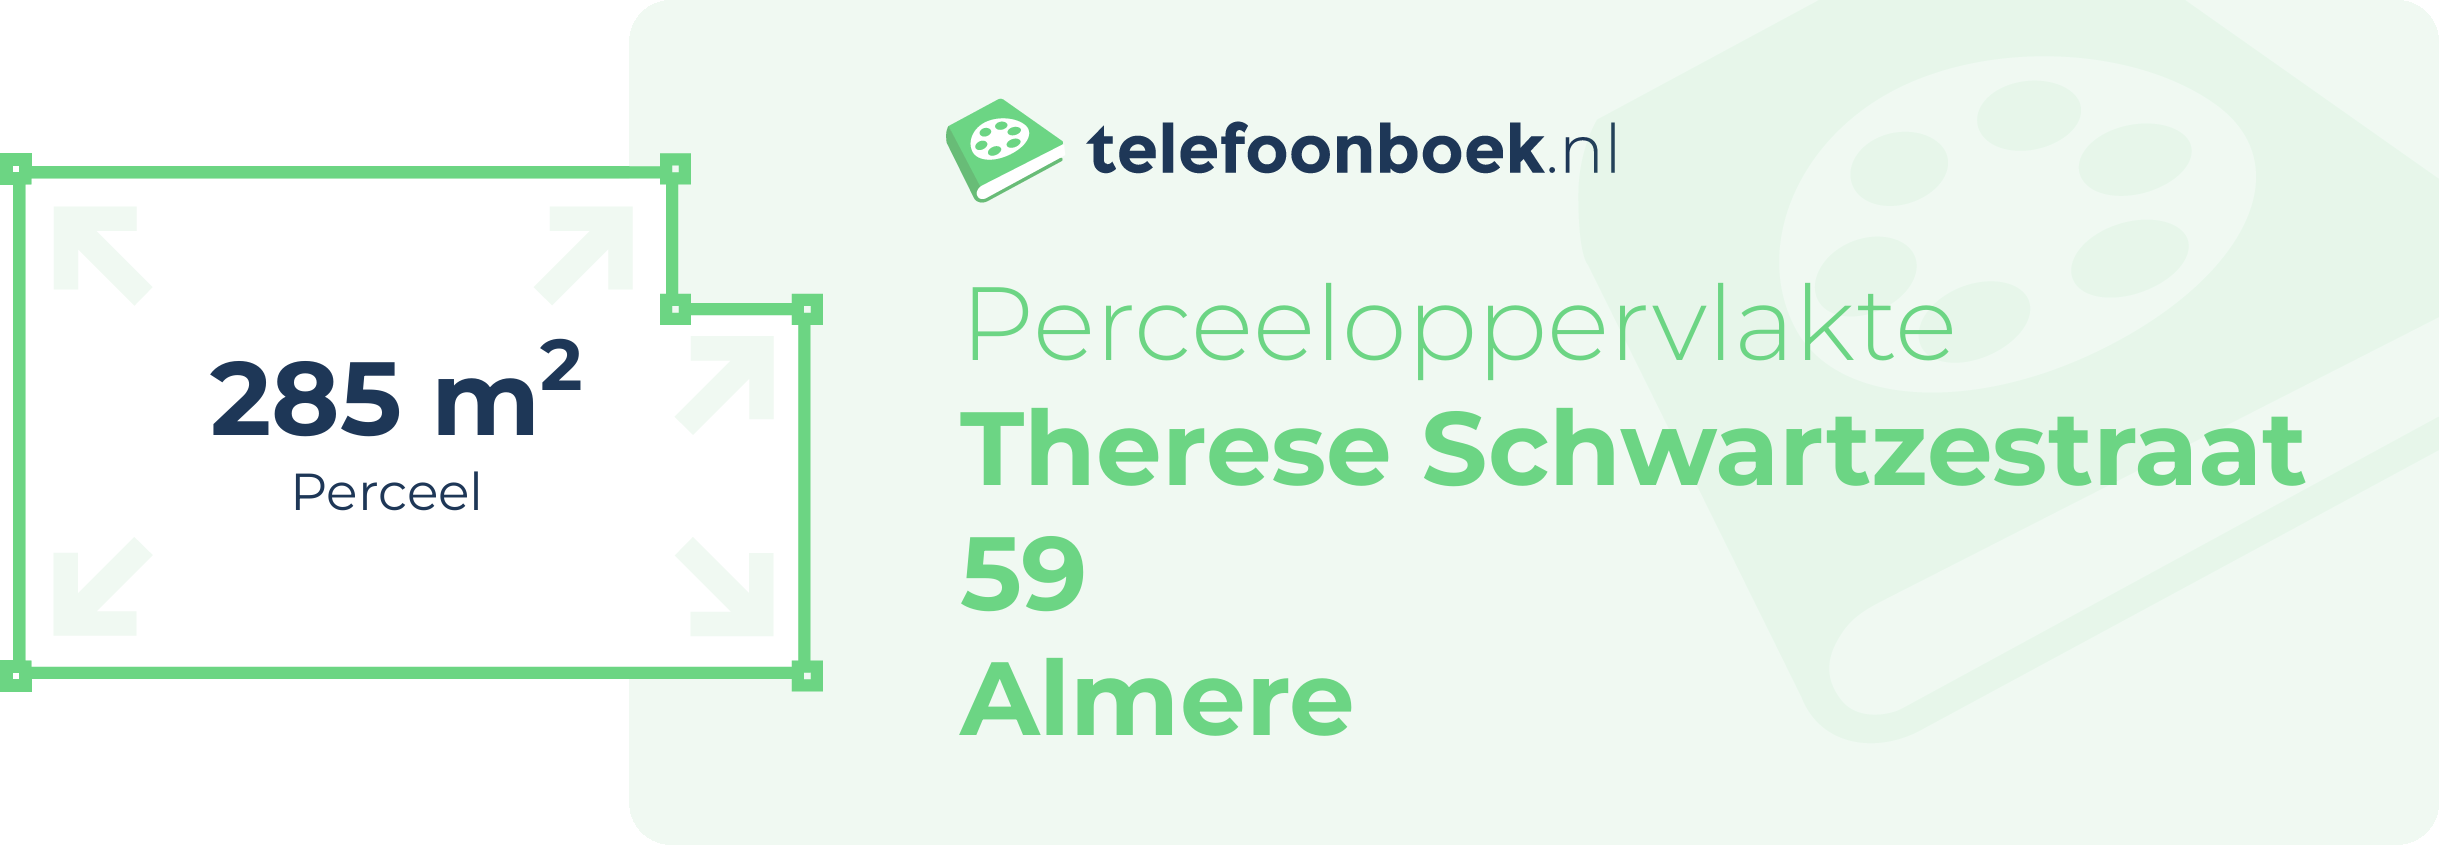 Perceeloppervlakte Therese Schwartzestraat 59 Almere